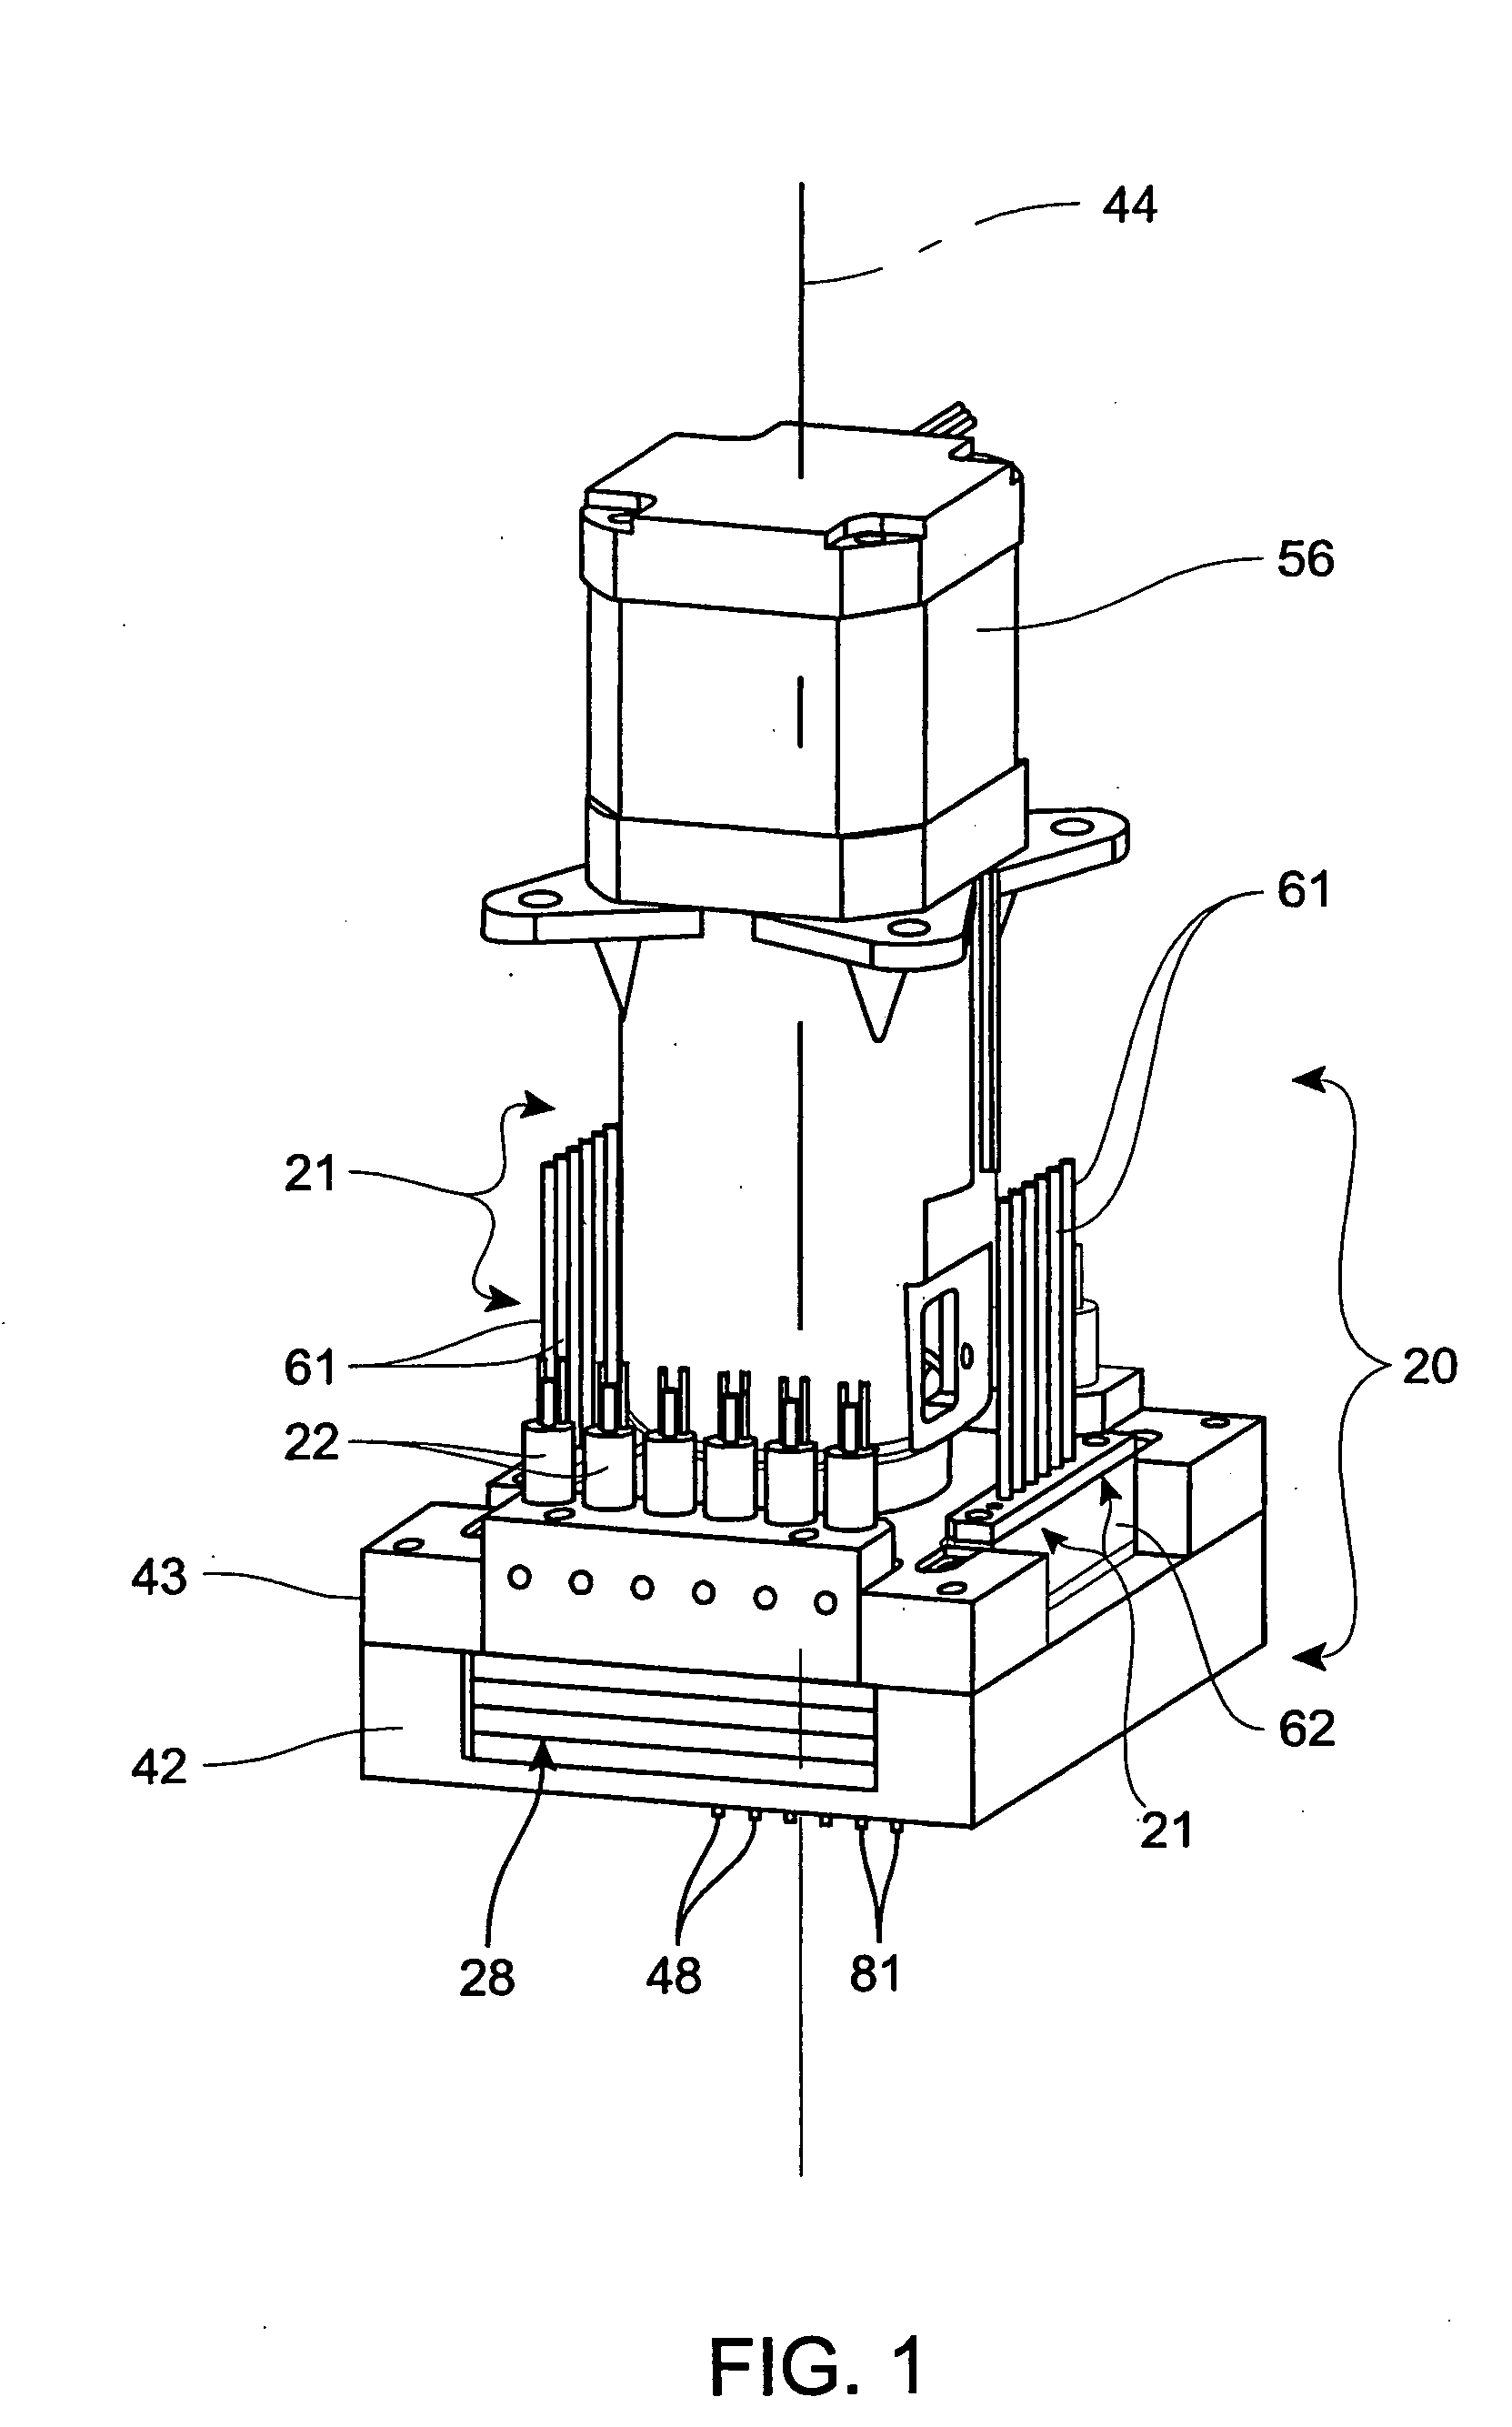 Hybrid valve apparatus and method for fluid handling